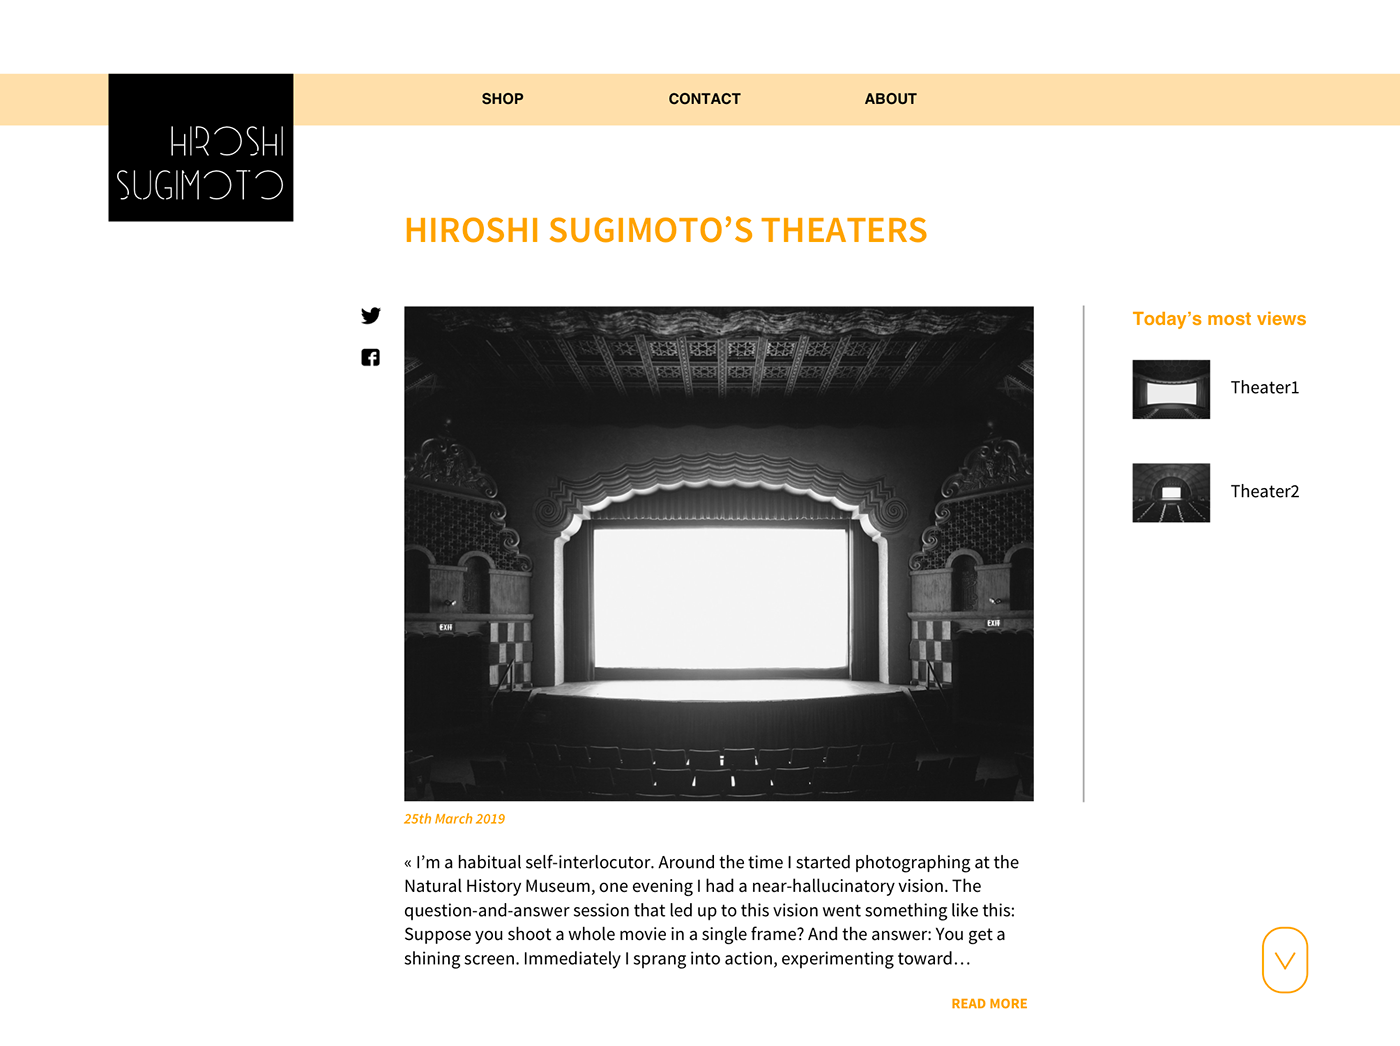 Webdesign redesign ux UI user interface user experience theater  hiroshi suhimoto photos Website